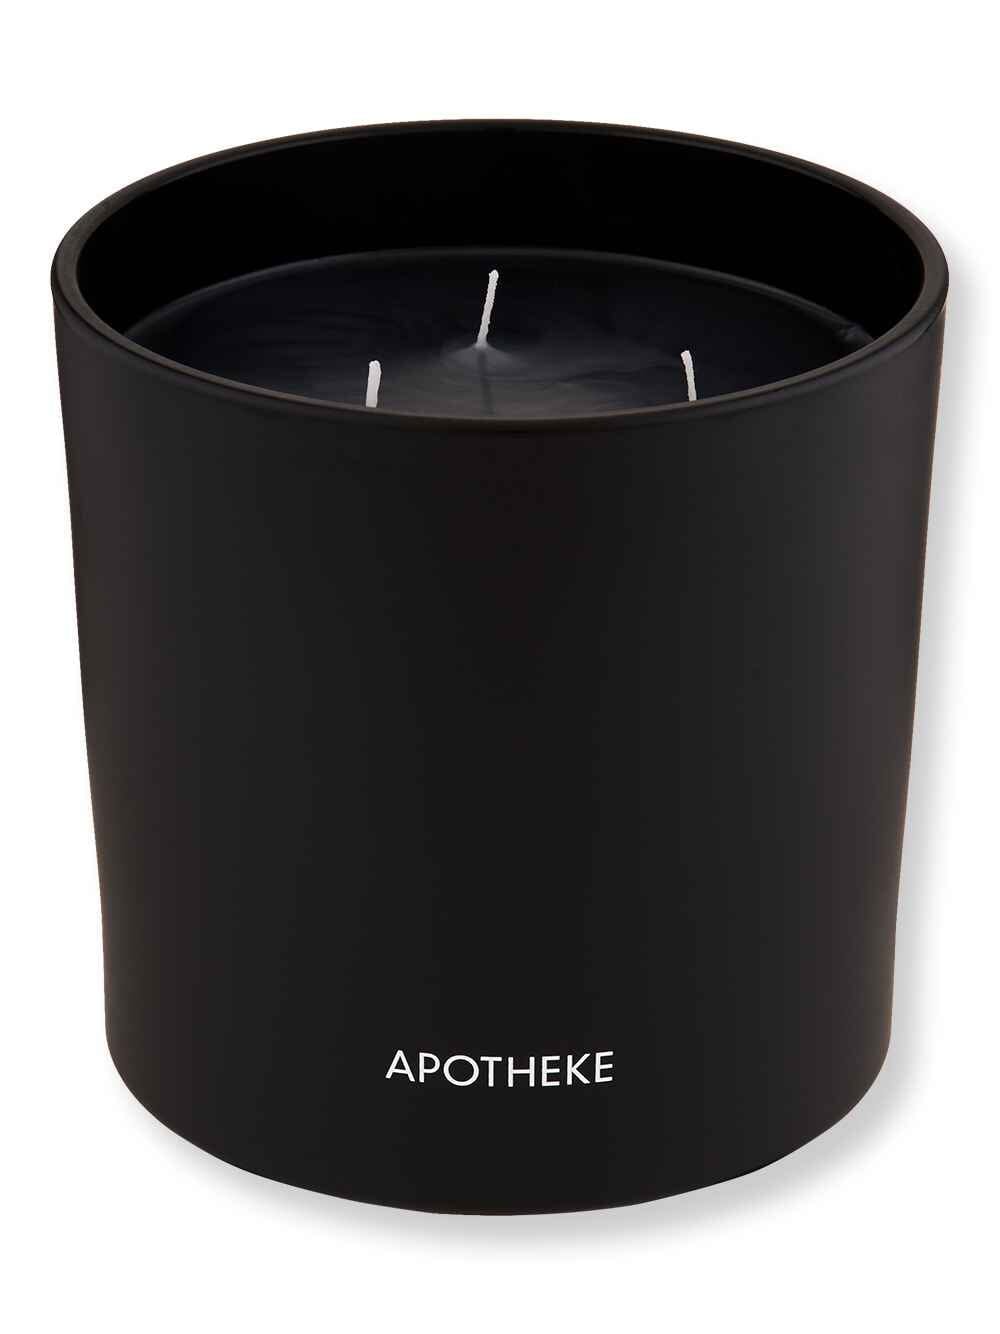 Apotheke Apotheke Charcoal 3-Wick Candle 32 oz Candles & Diffusers 